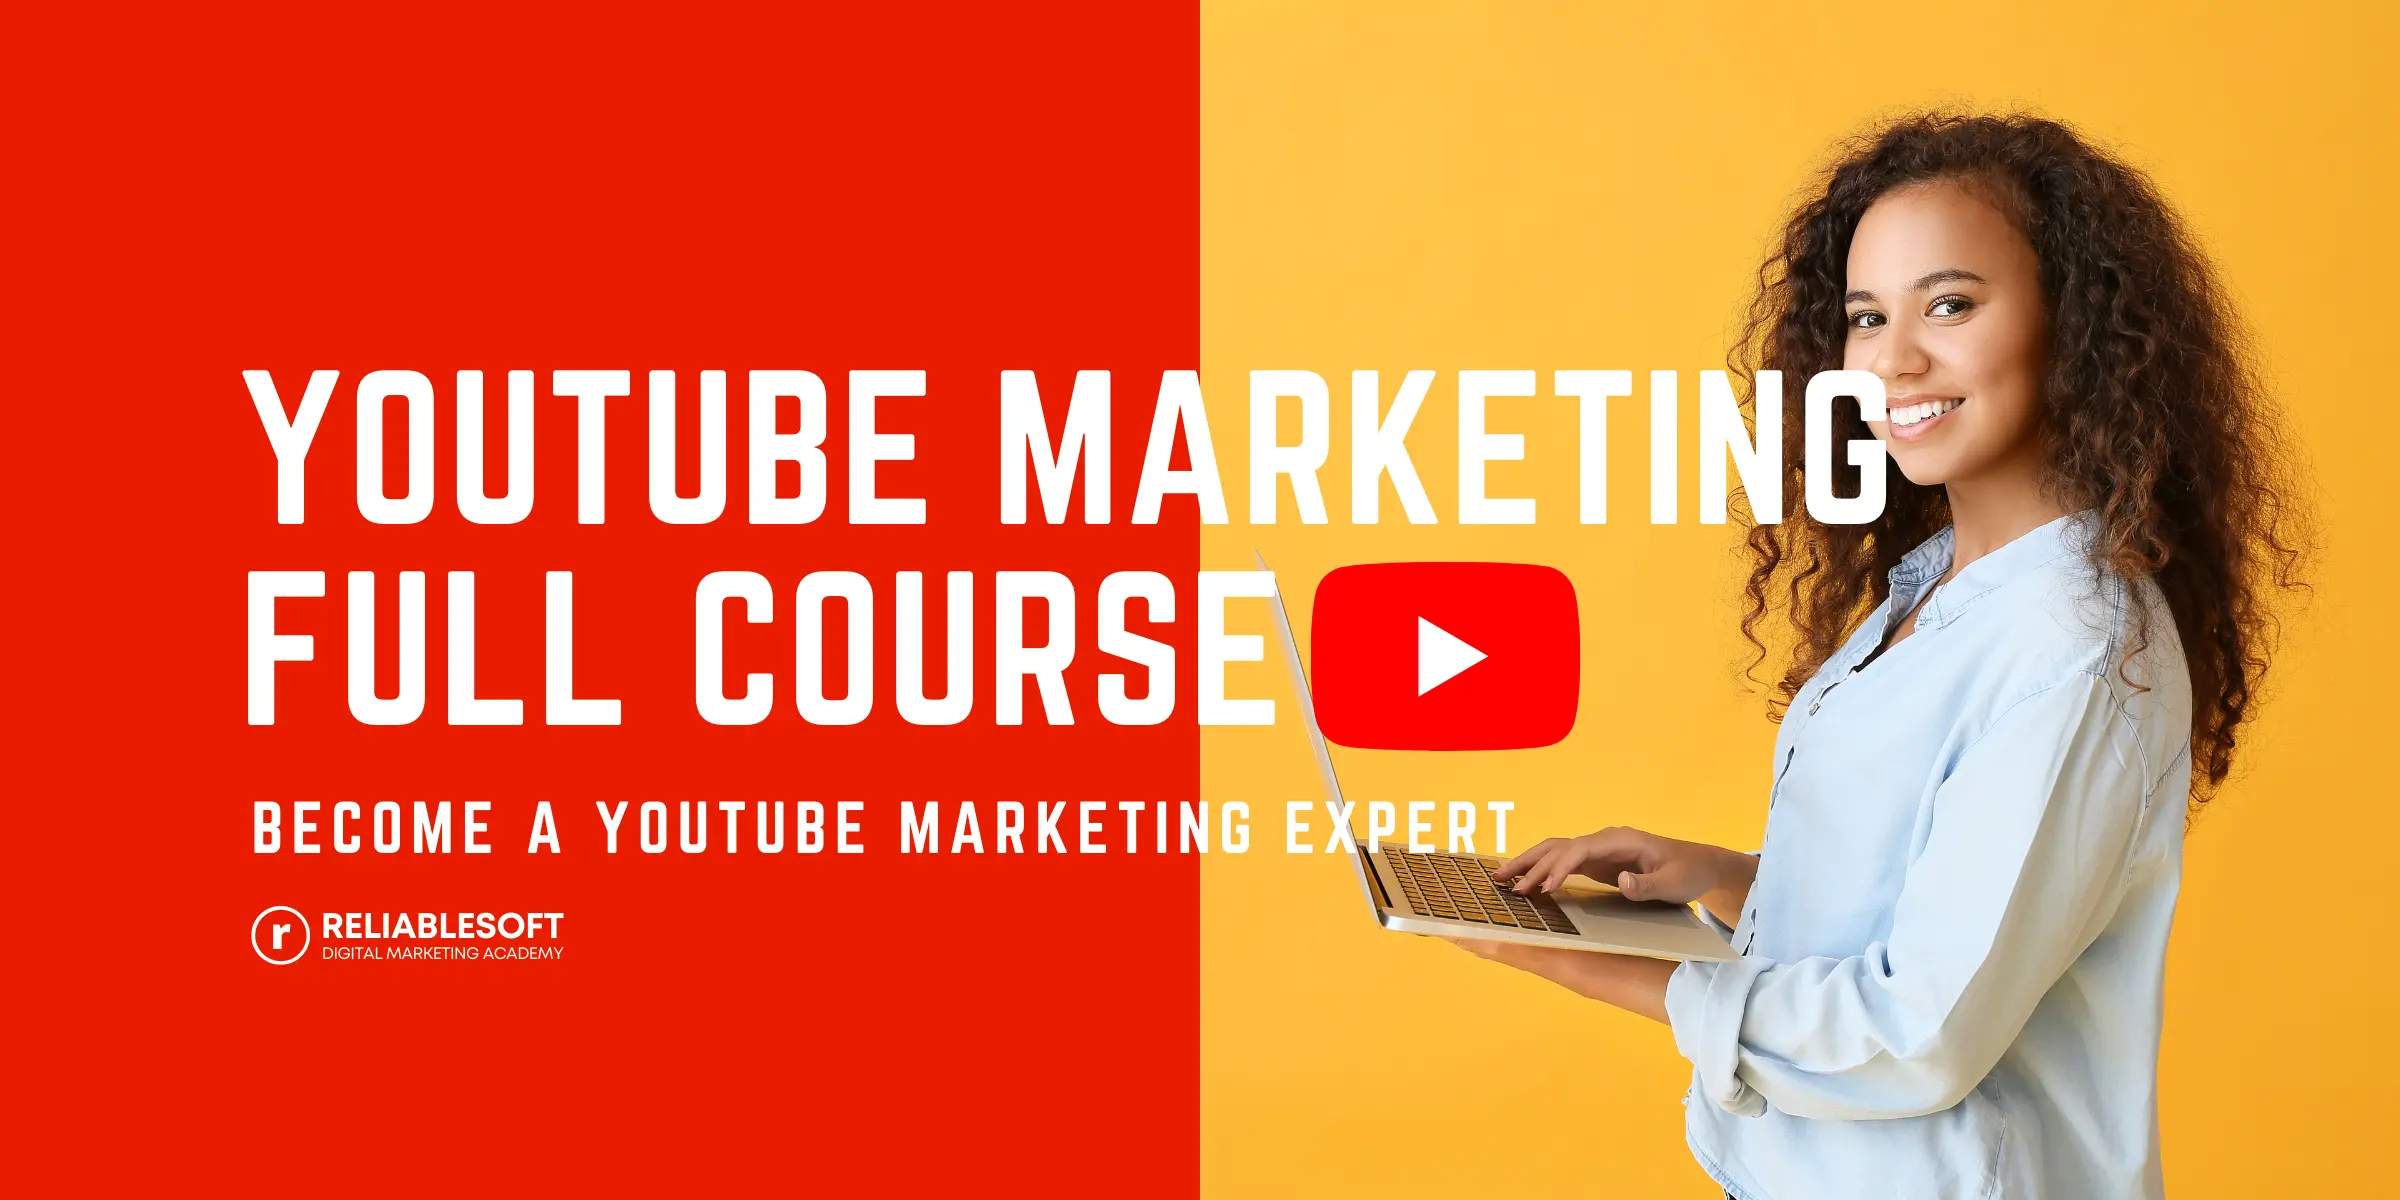 YouTube Marketing Full Course